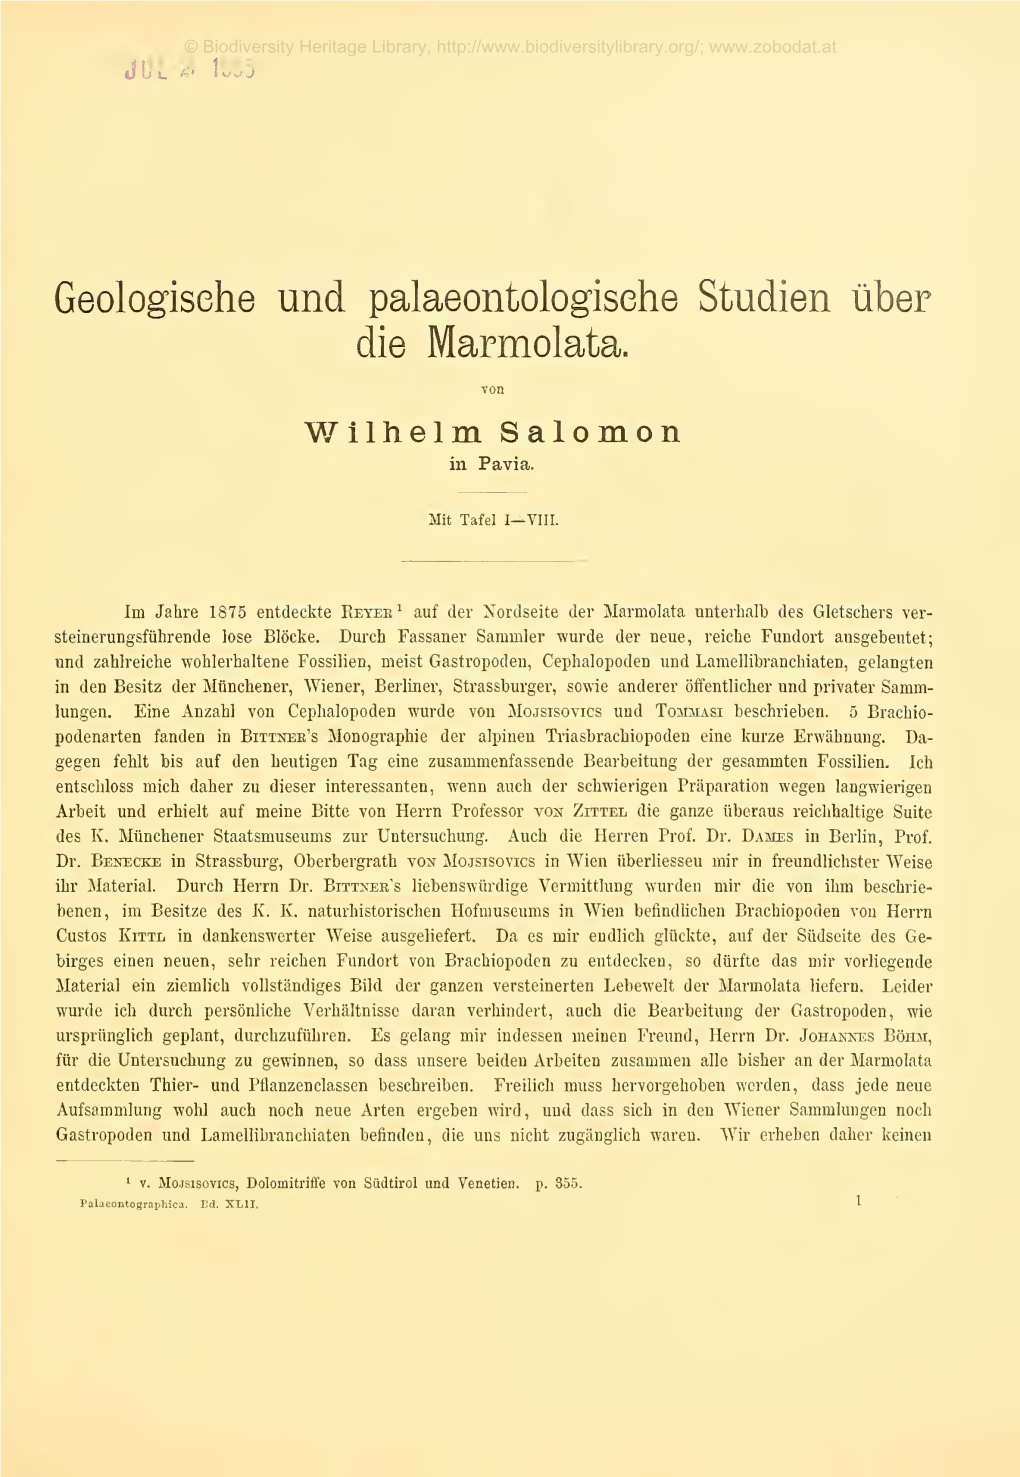 Wilhelm Salomon in Pavia